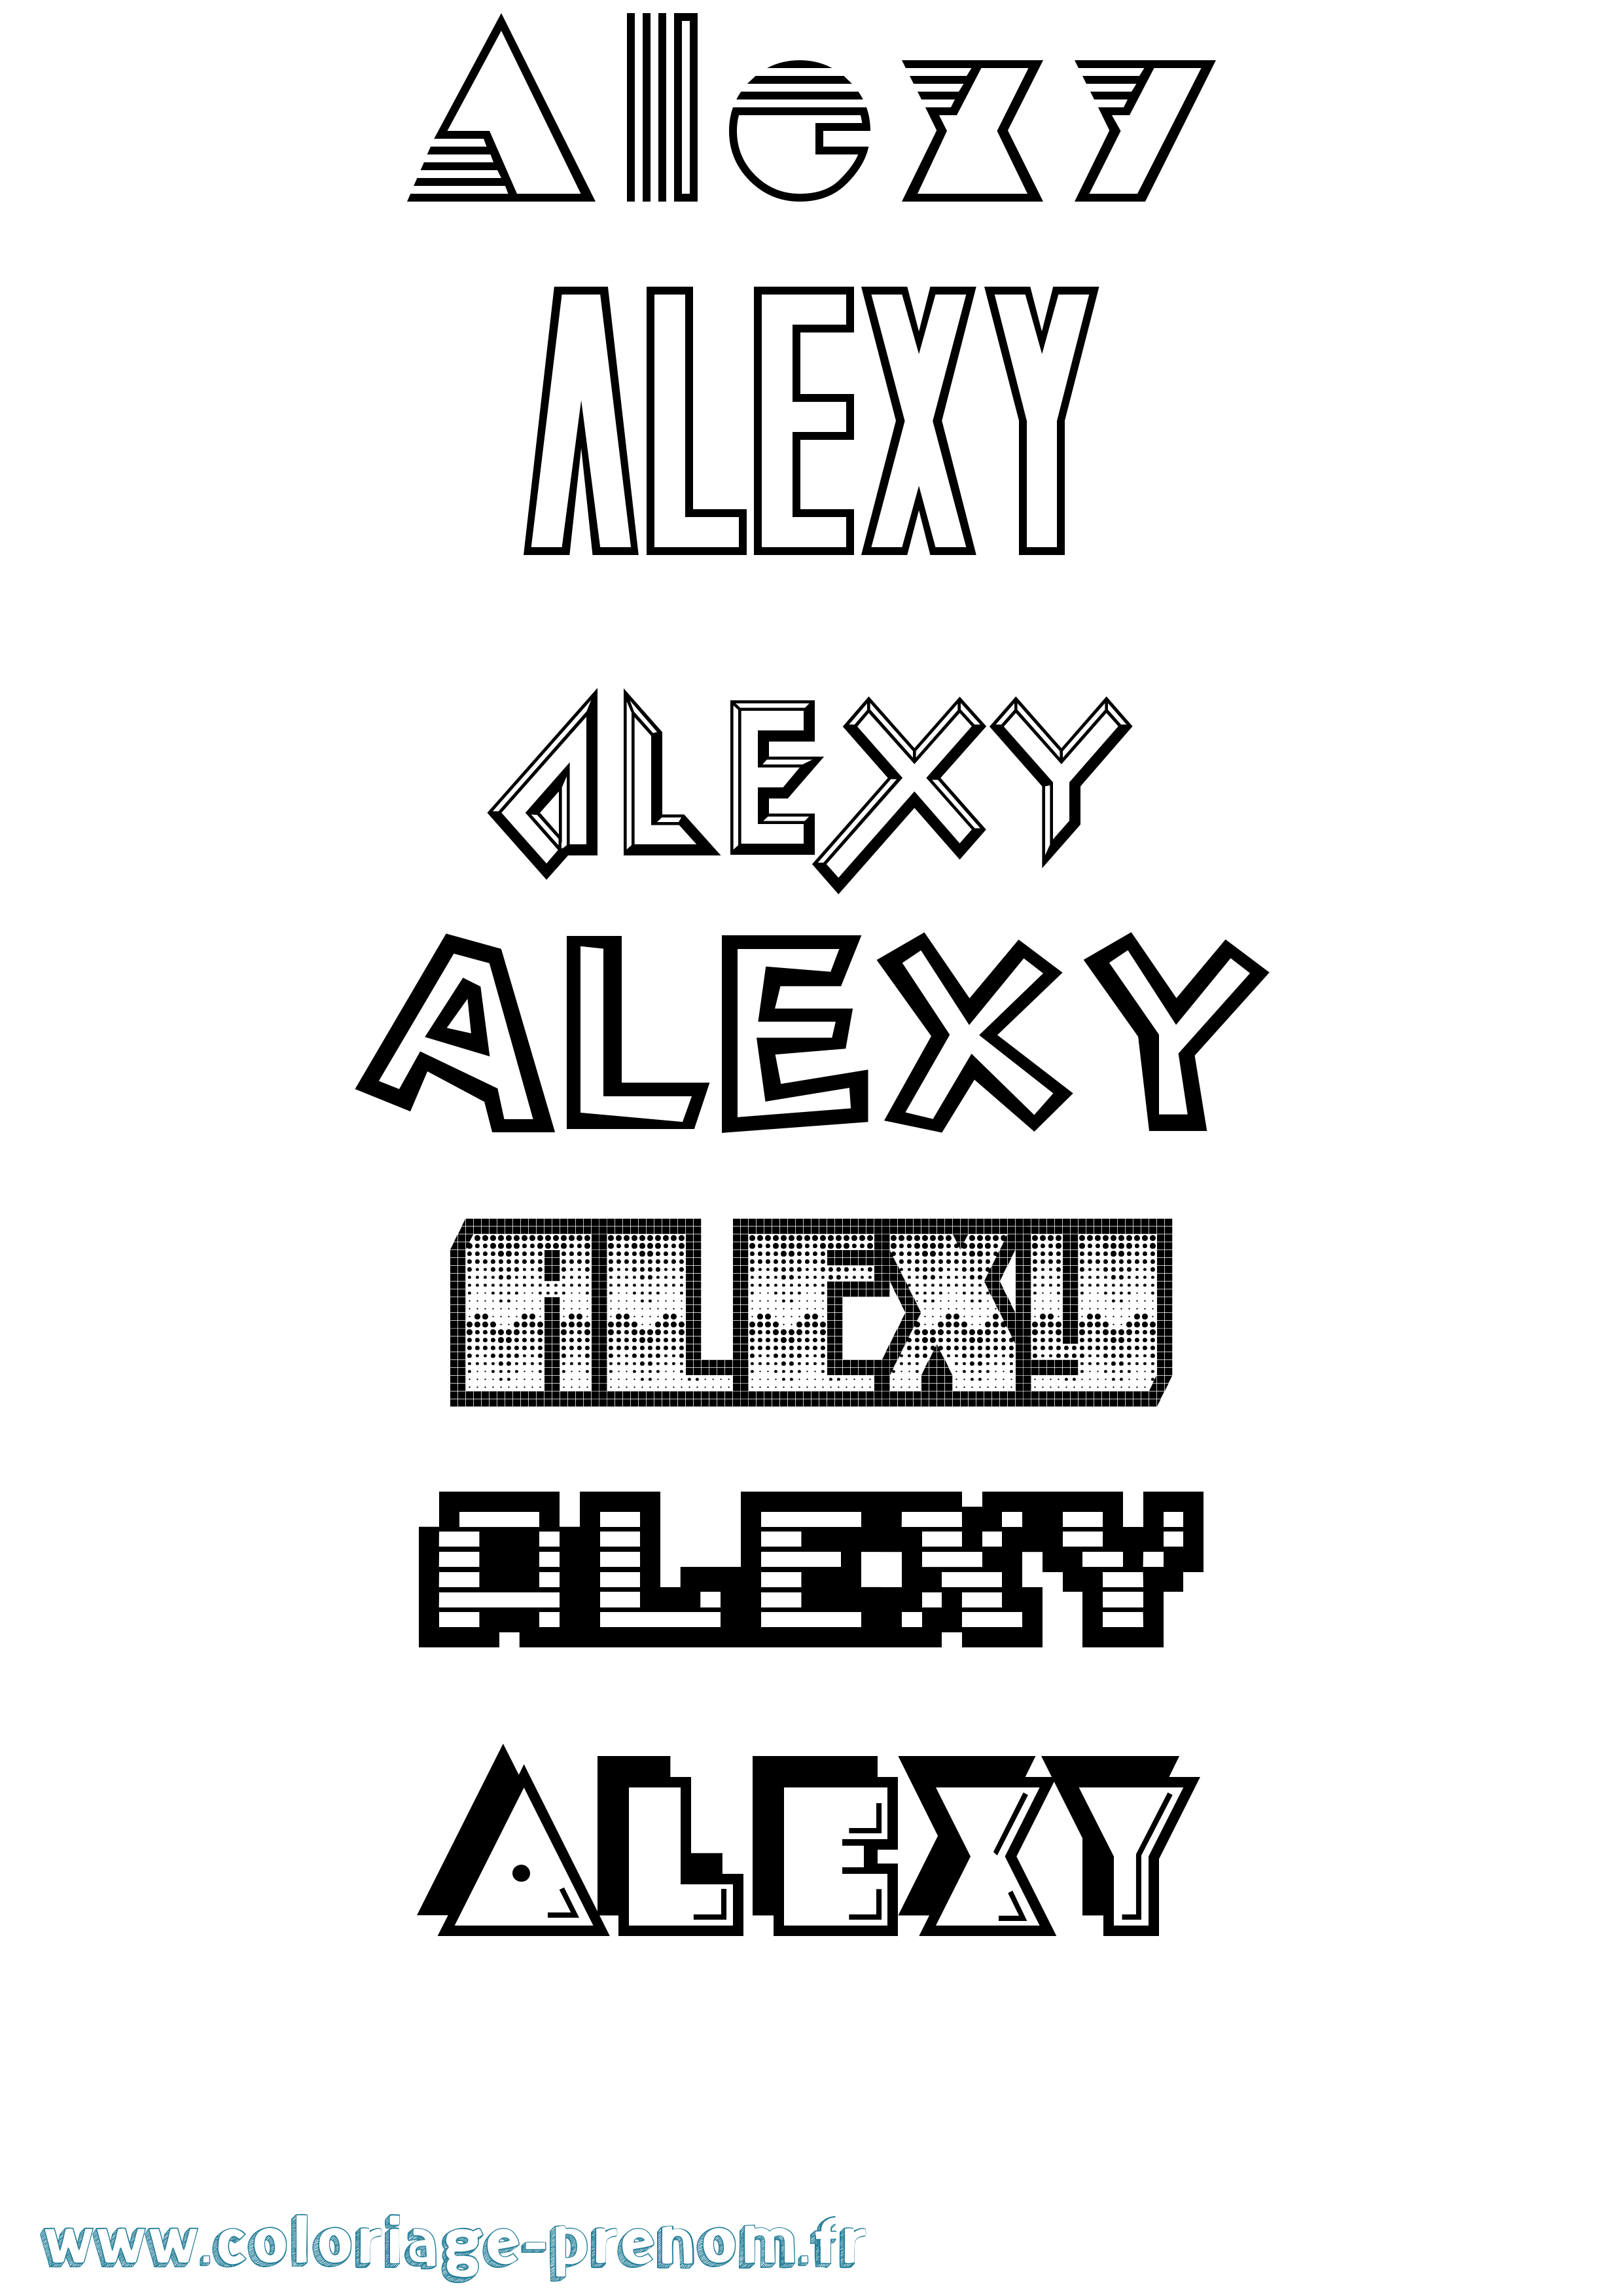 Coloriage prénom Alexy Jeux Vidéos